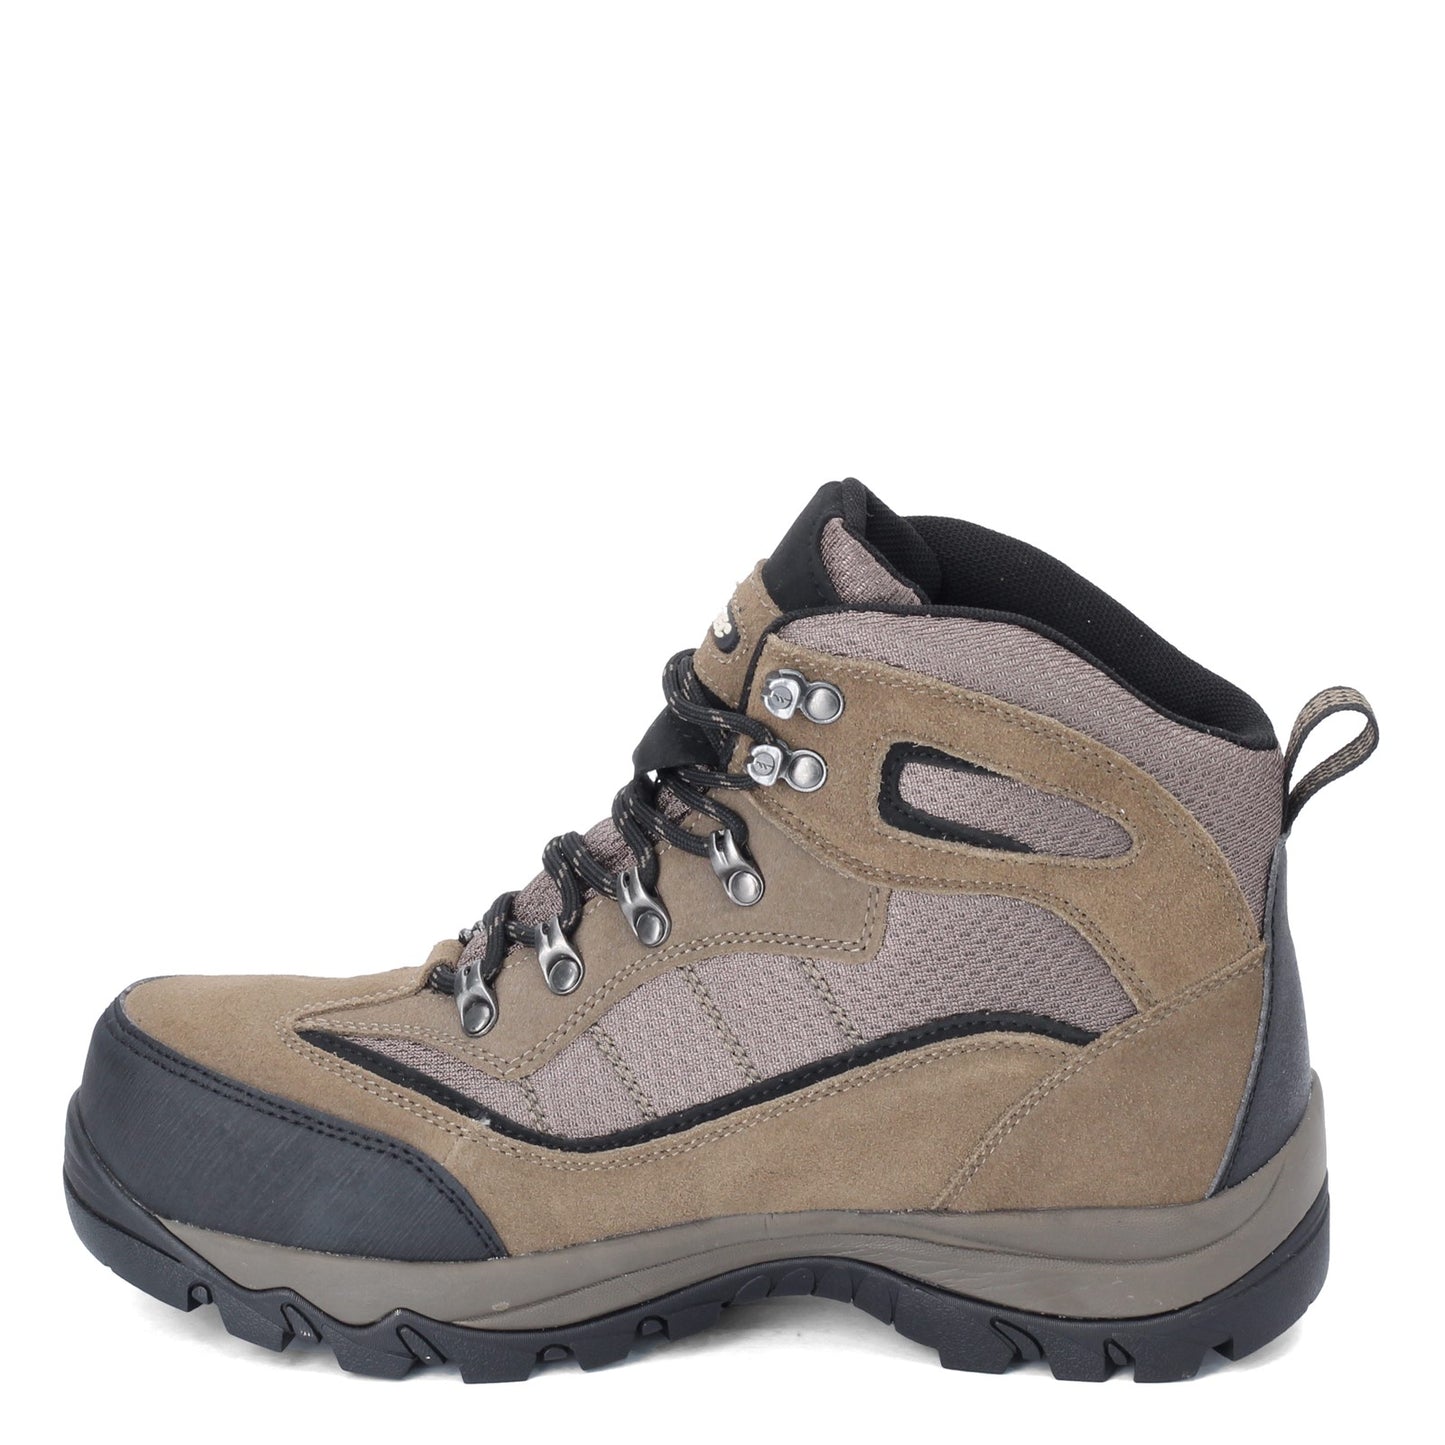 Peltz Shoes  Men's Hi Tec Skamania Waterproof Hiking Shoe - Wide Width TAUPE 9535W